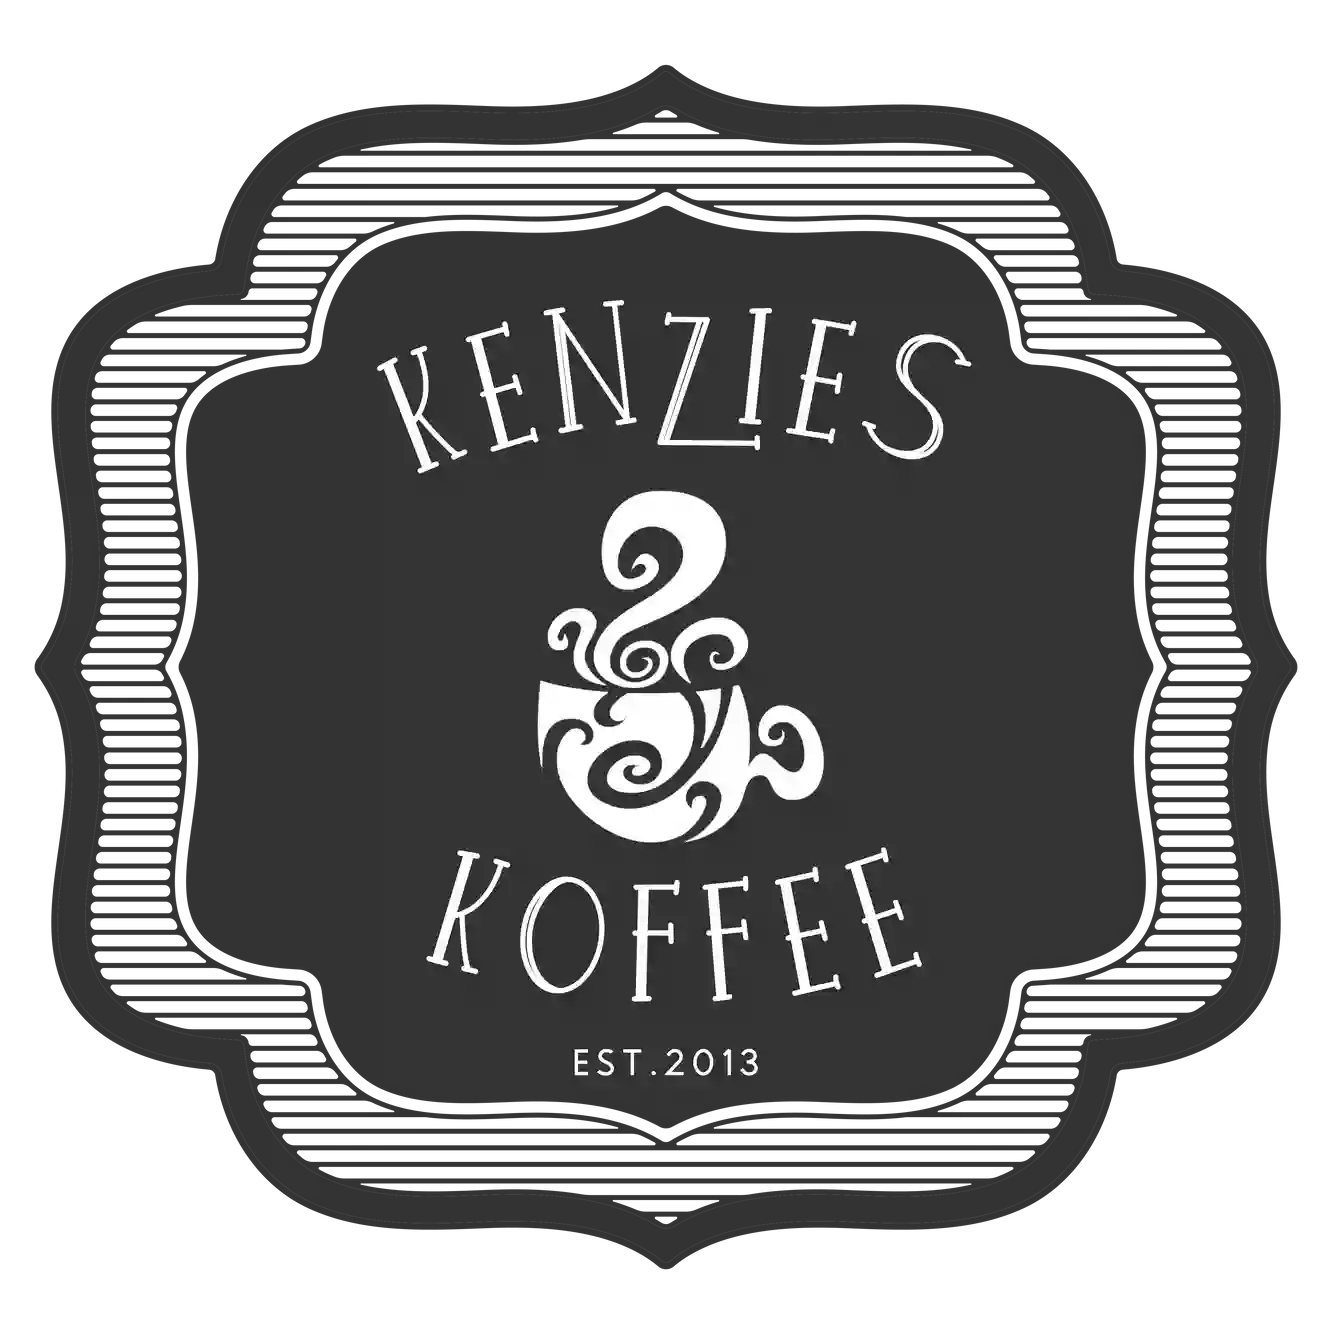 Kenzie's Koffee